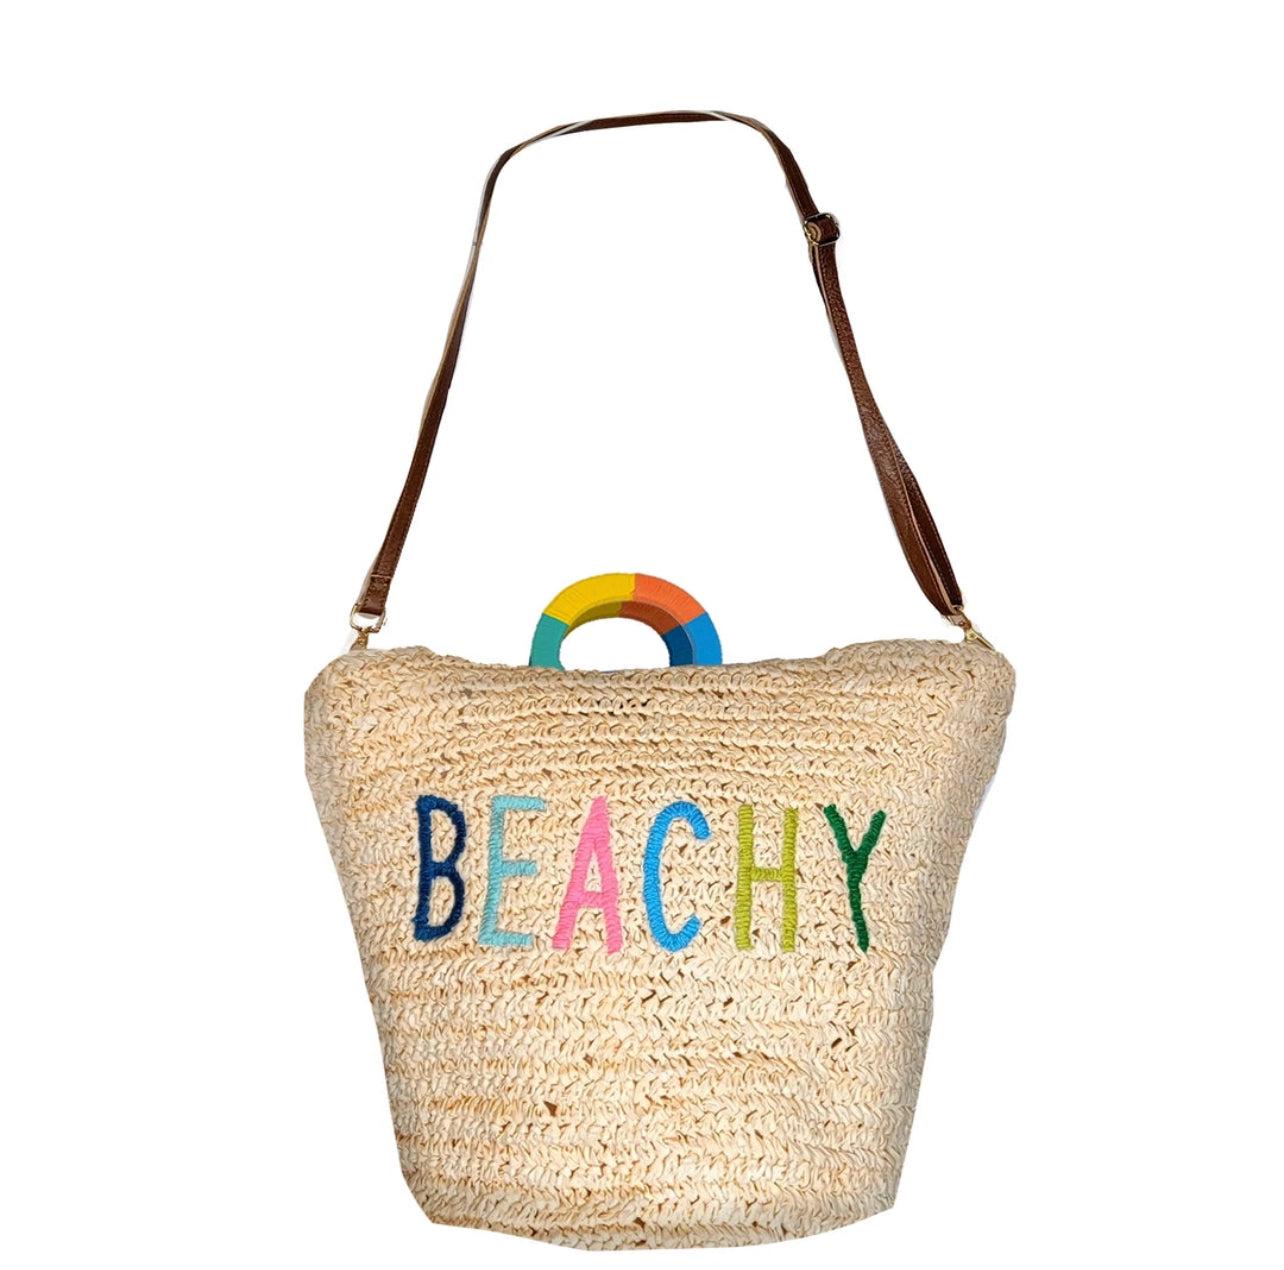 Beachy Raffia Tote Bag